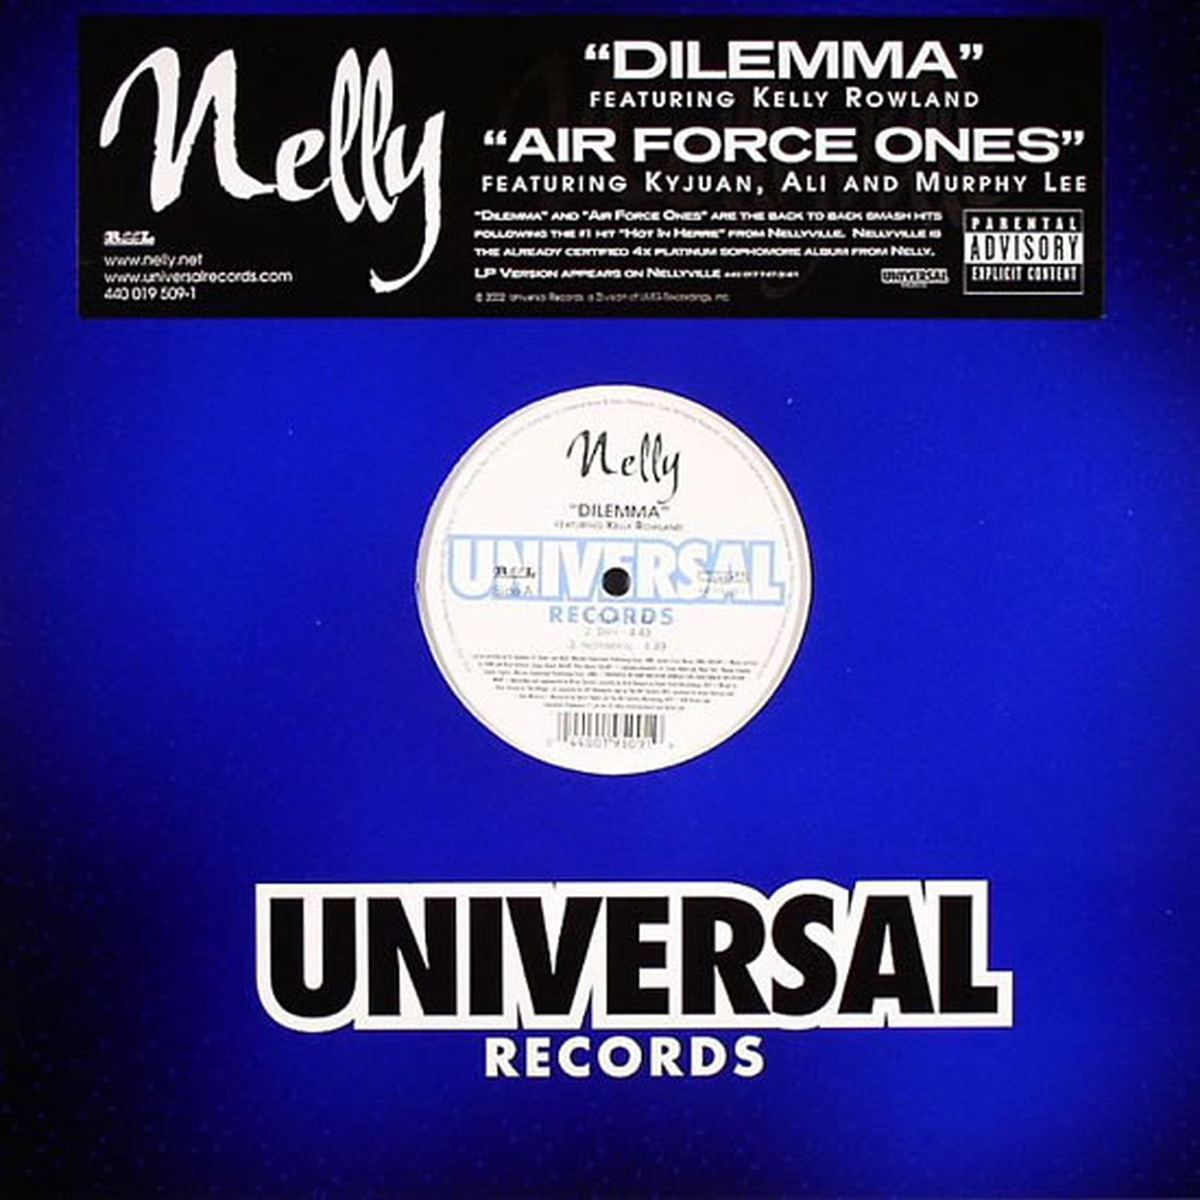 Nelly kelly rowland dilemma. Nelly Dilemma. Dilemma (feat. Kelly Rowland). Universal records.